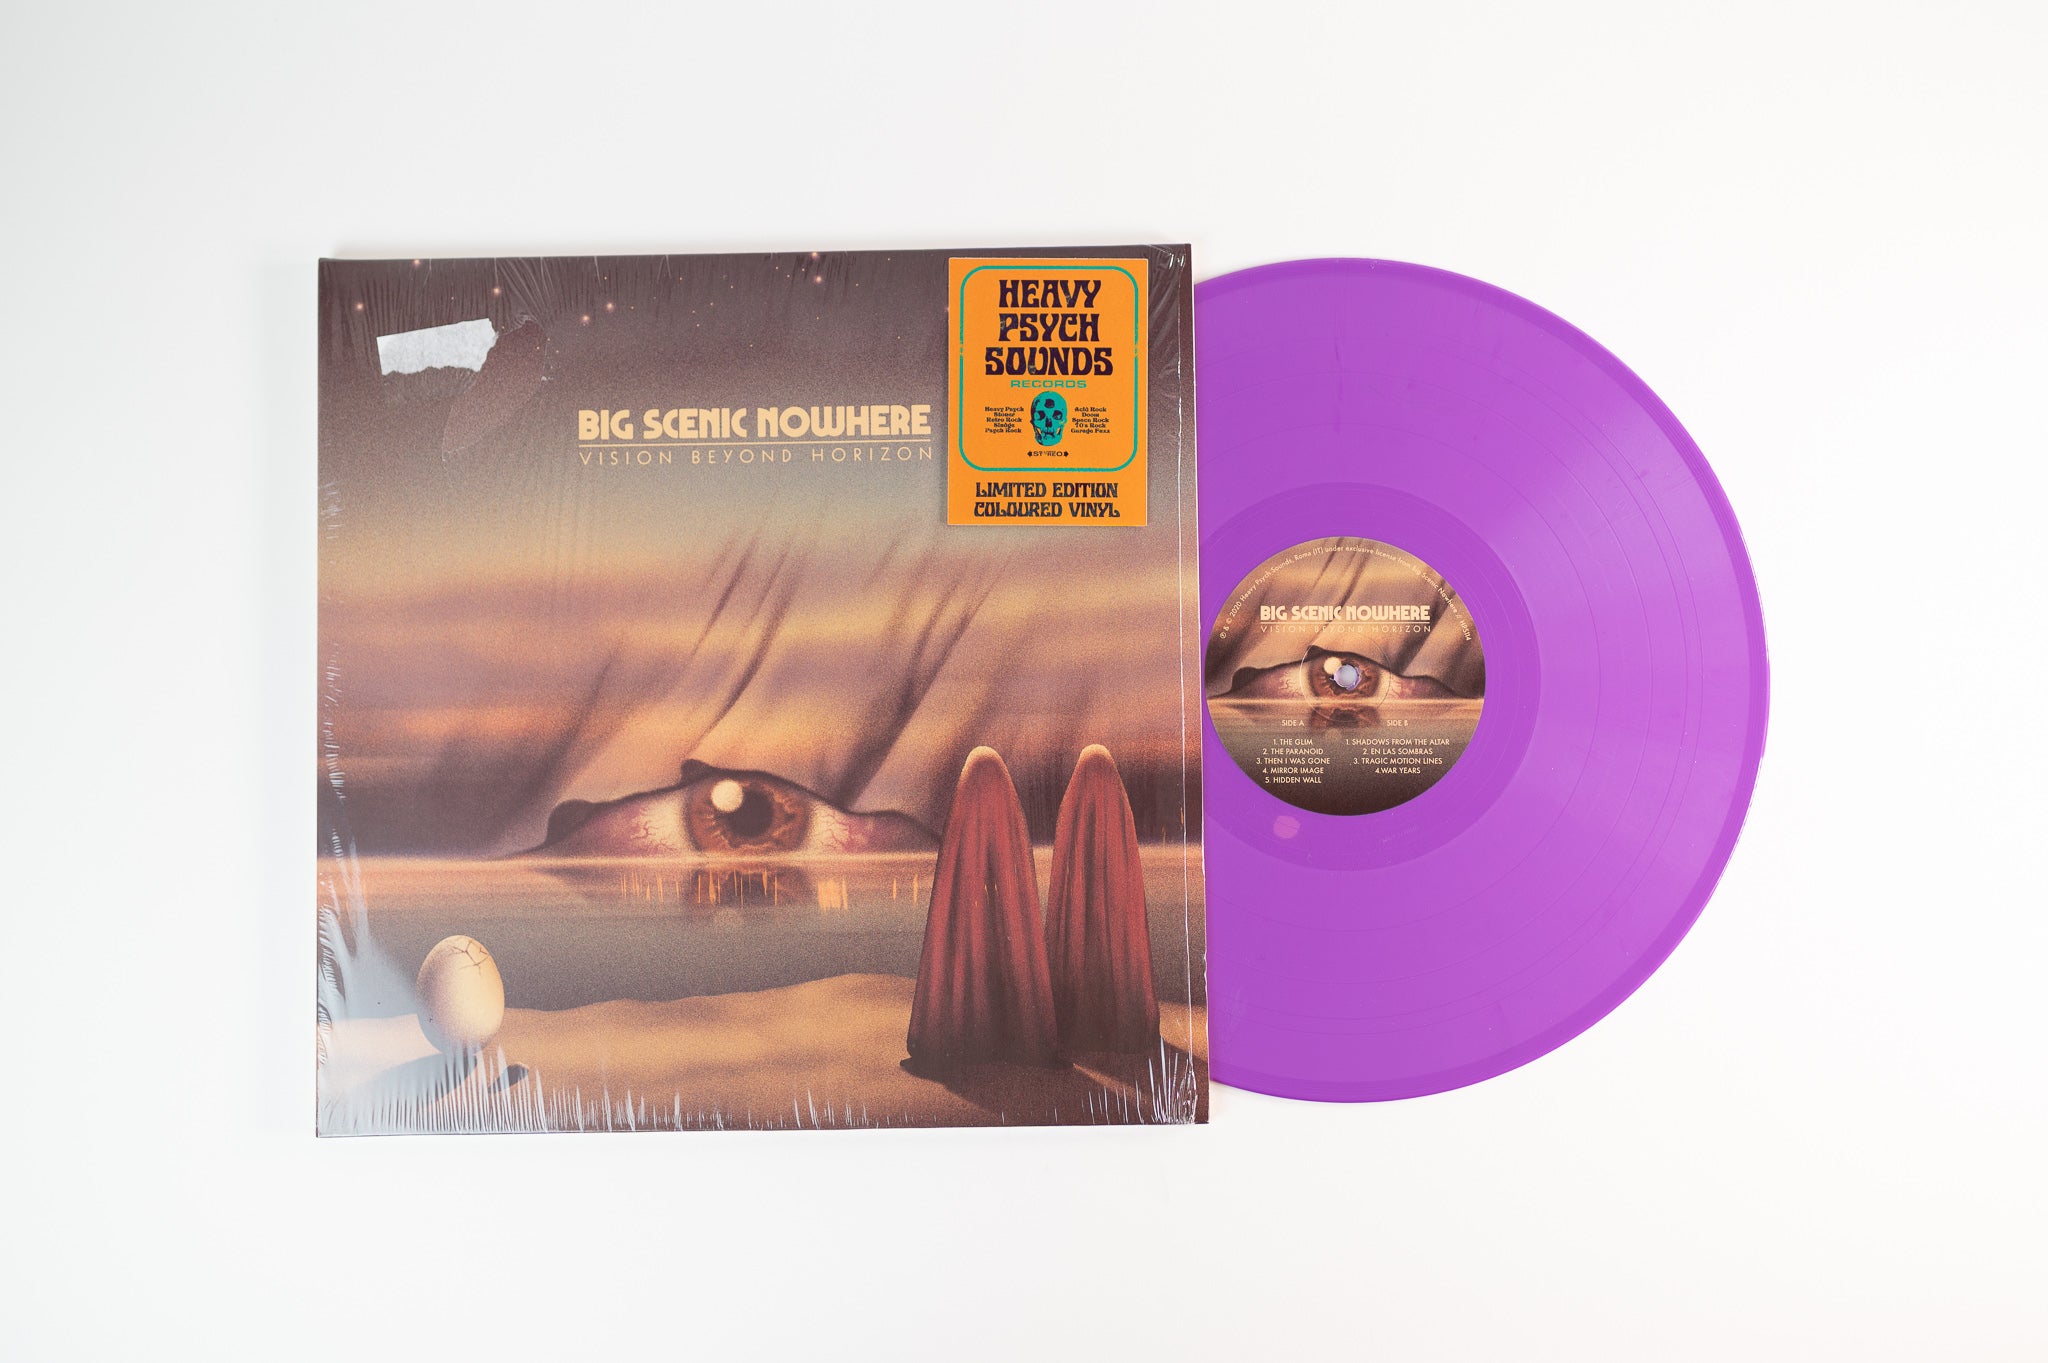 Big Scenic Nowhere - Vision Beyond Horizon on Heavy Psych Sounds Ltd Purple